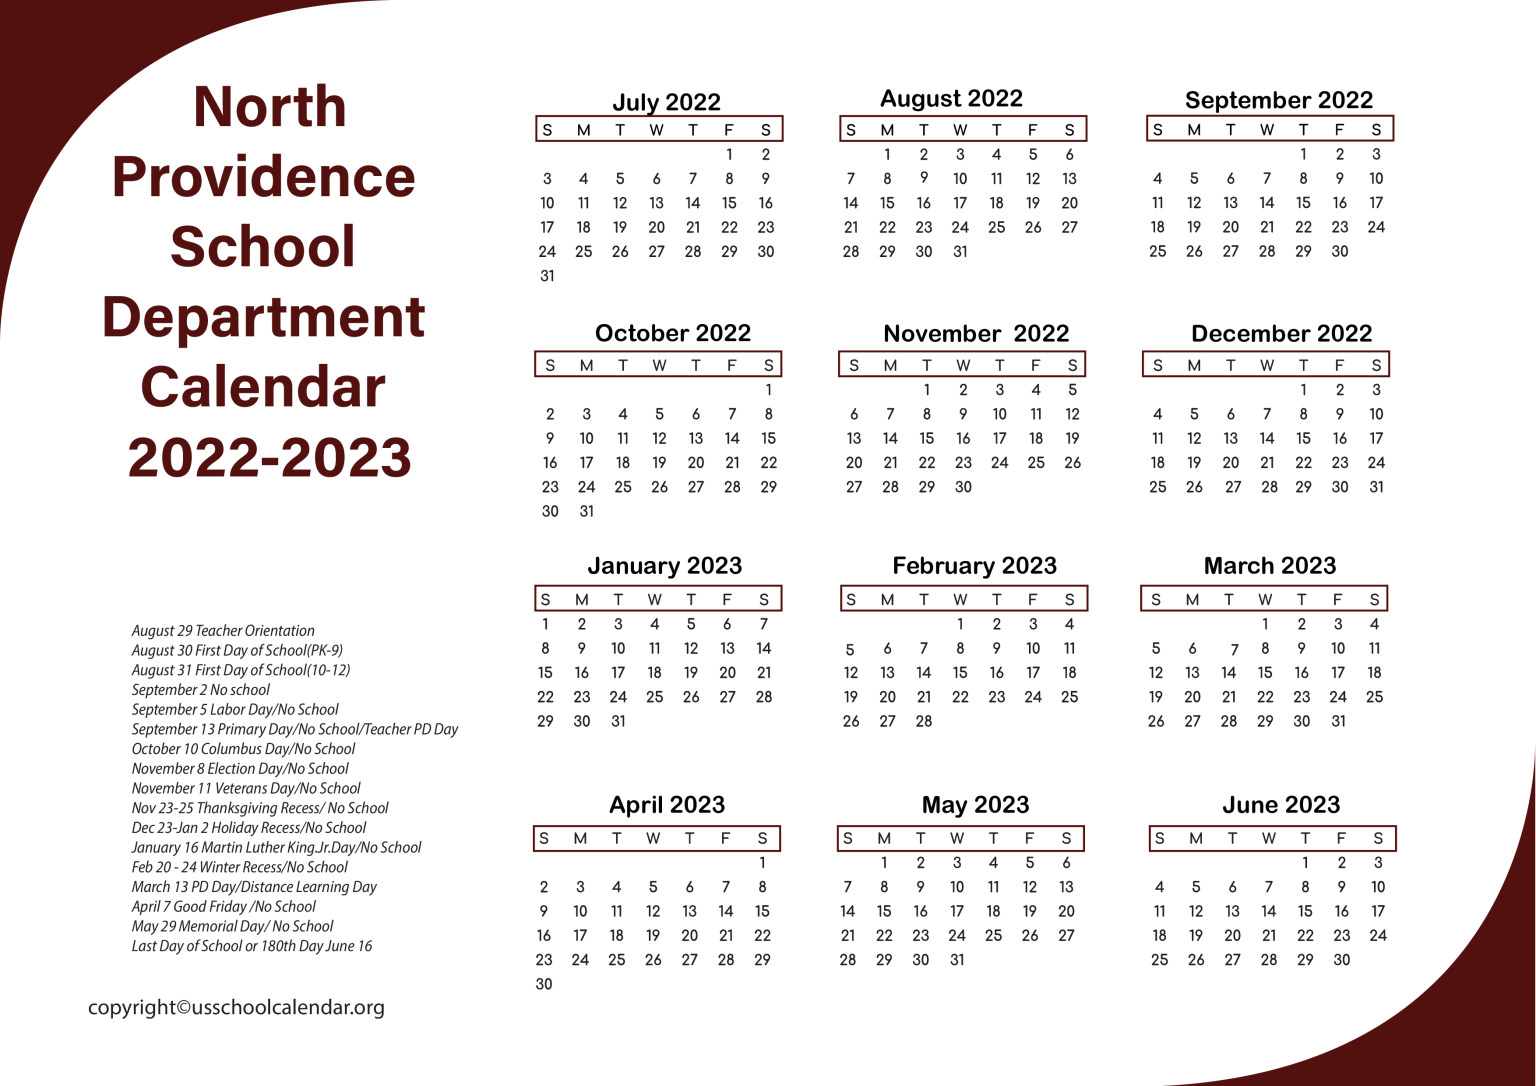 nprov-north-providence-school-department-calendar-2023